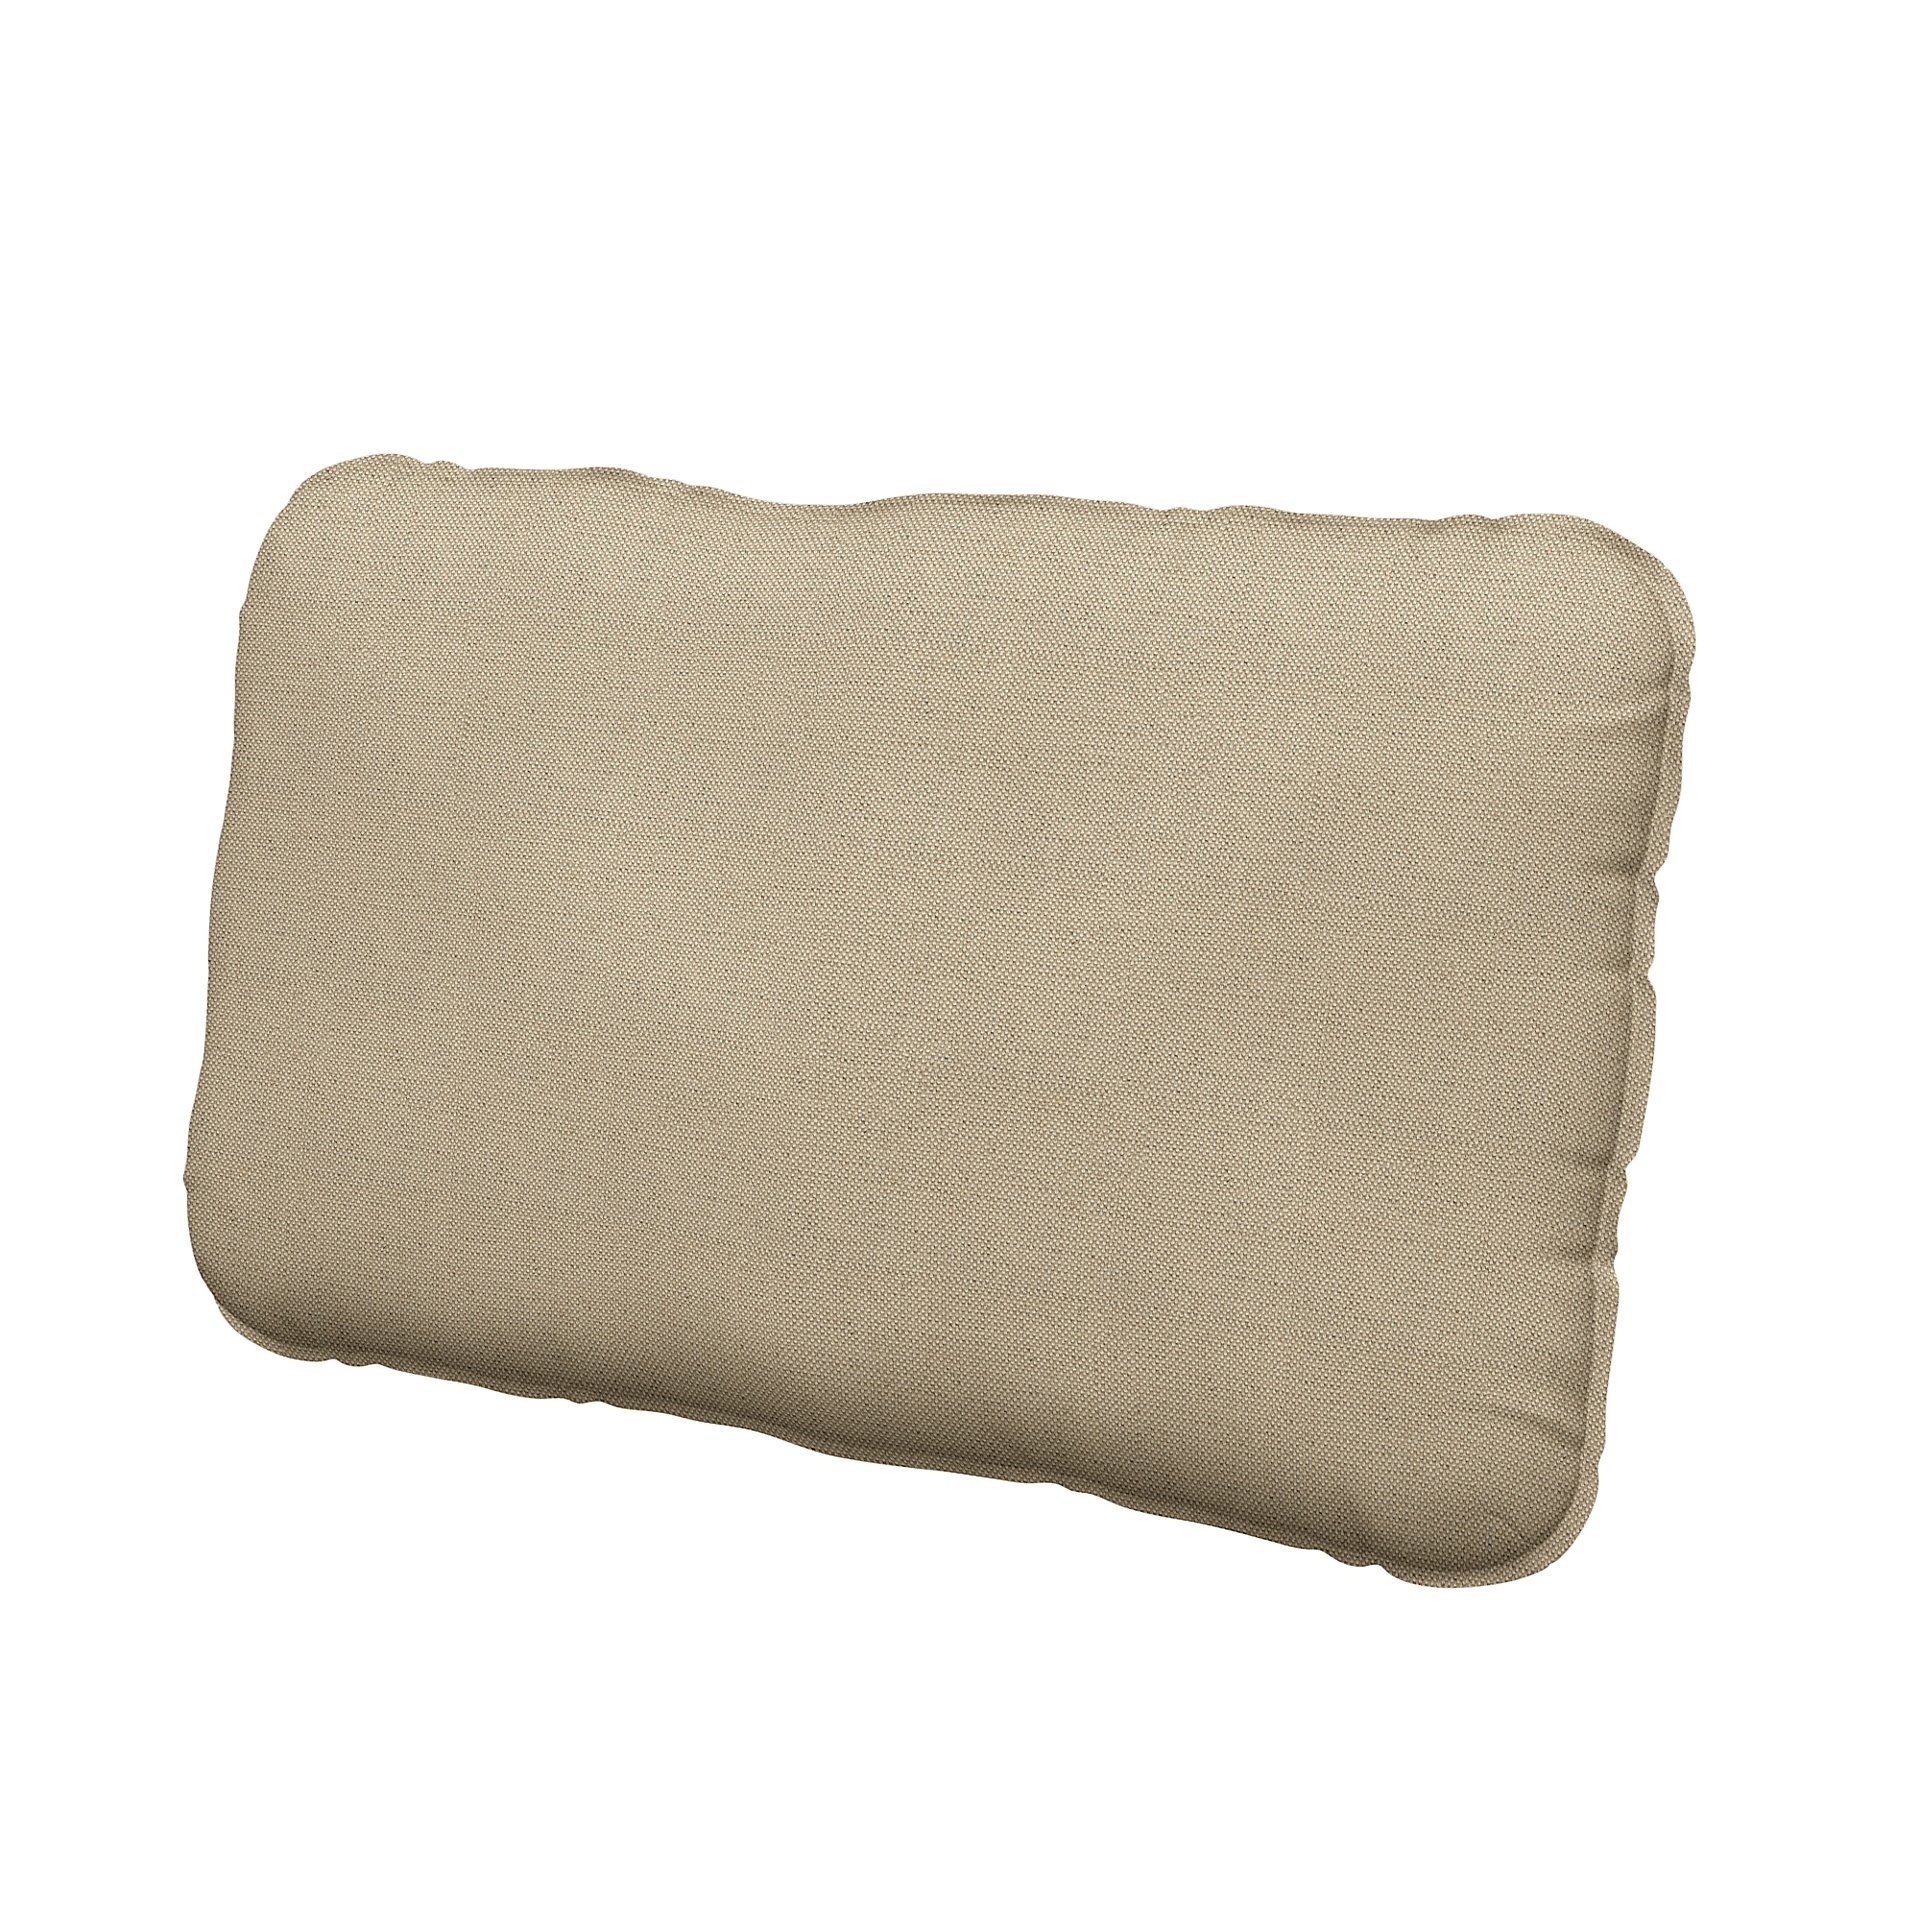 IKEA - Vallentuna back cushion cover 40x75cm, Unbleached, Linen - Bemz